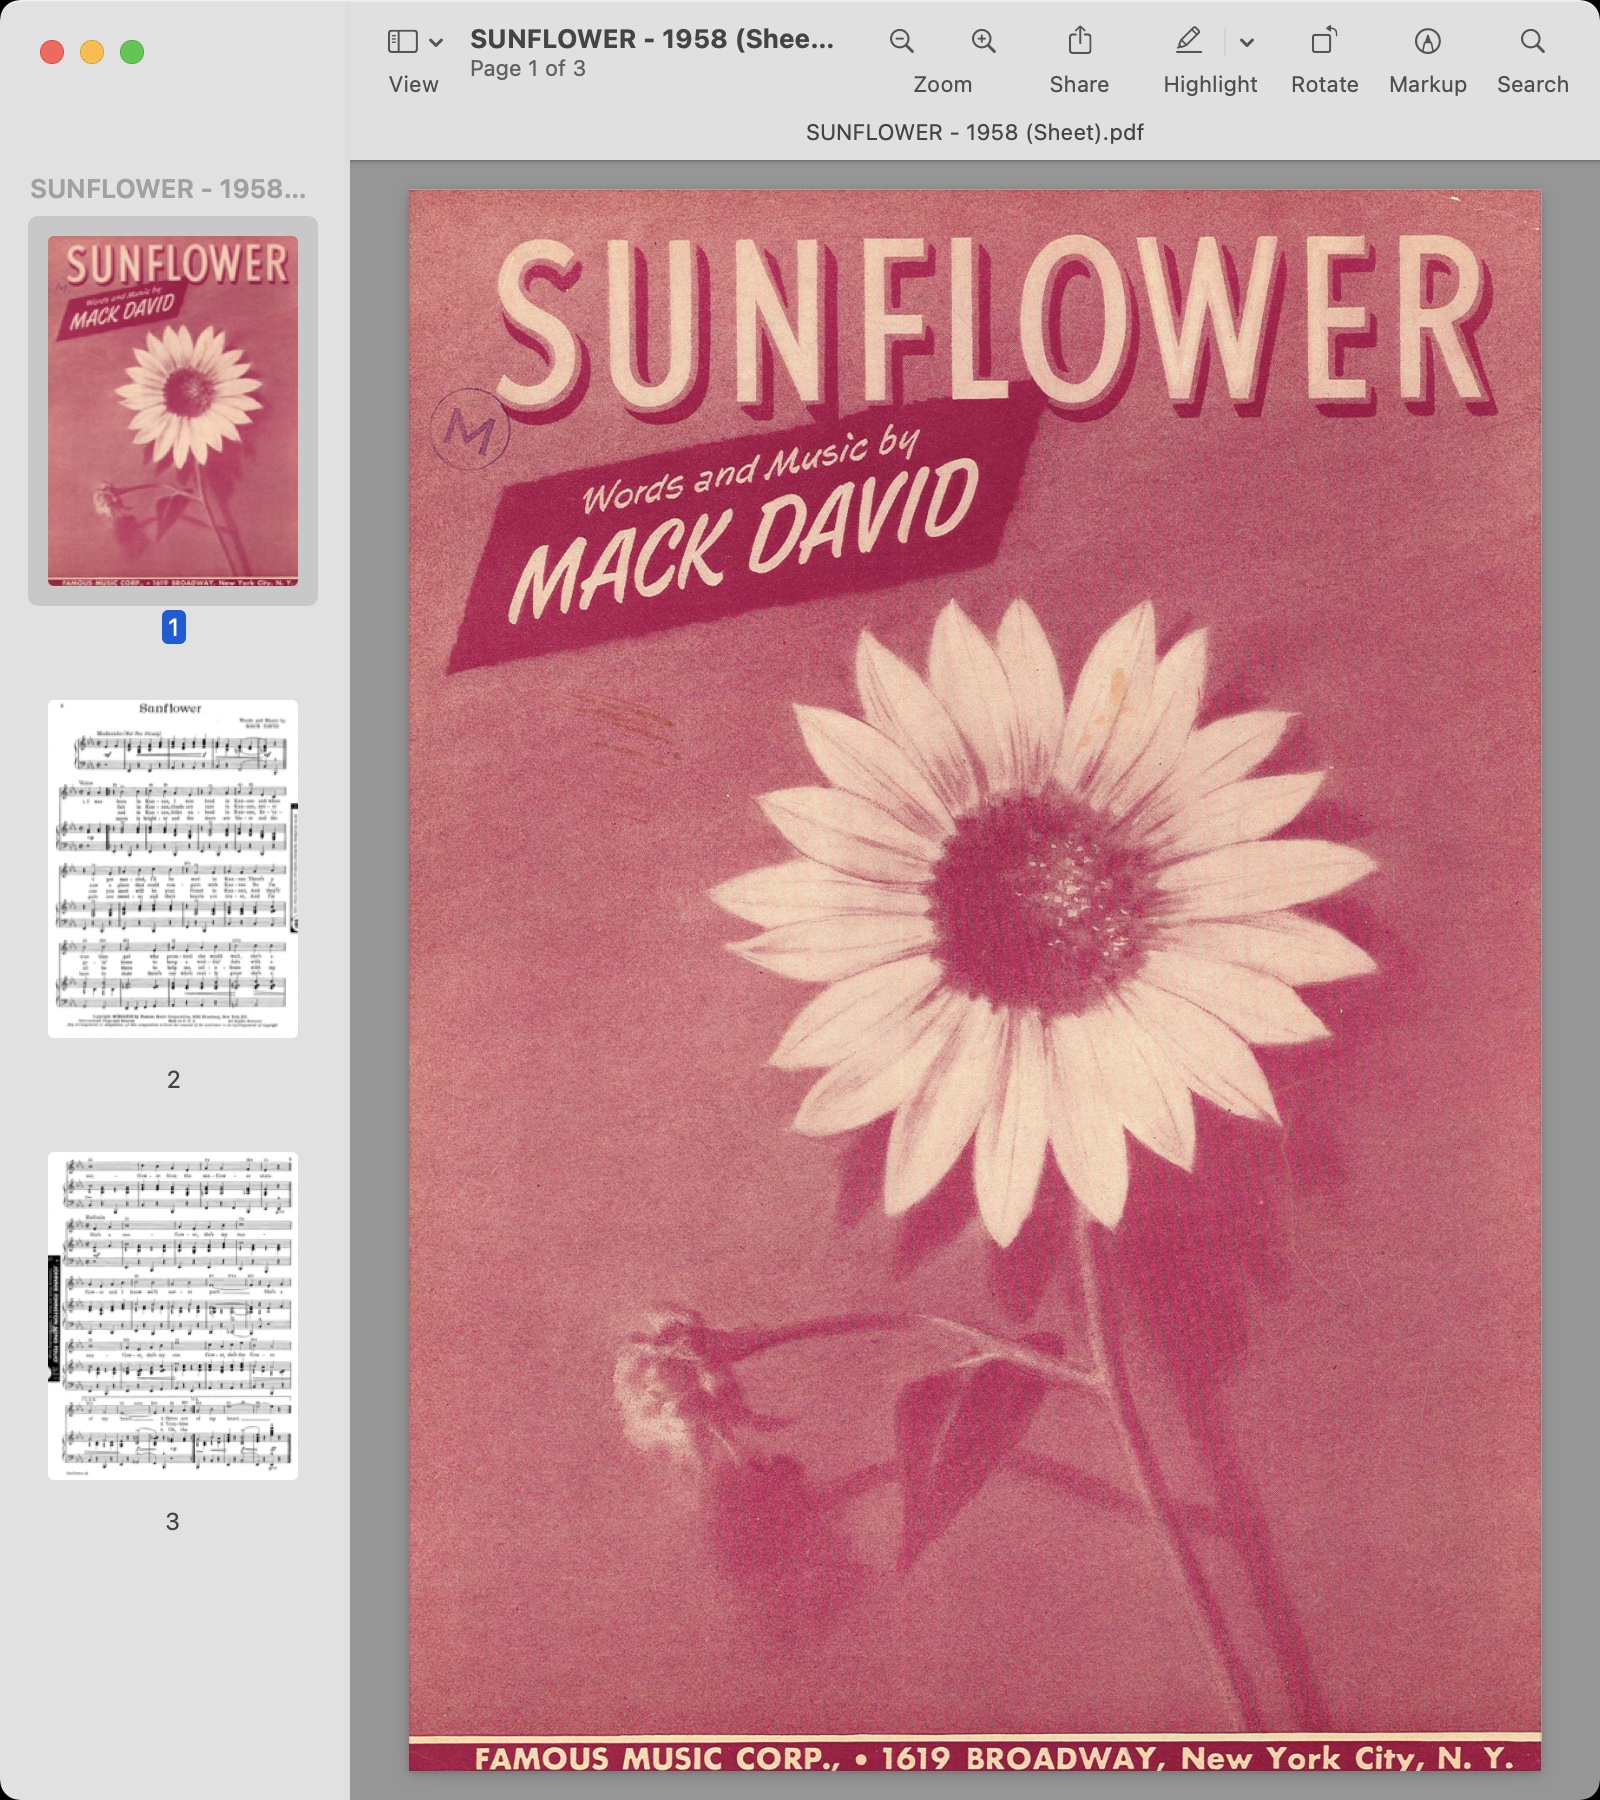 SUNFLOWER - 1958 (Sheet).jpg